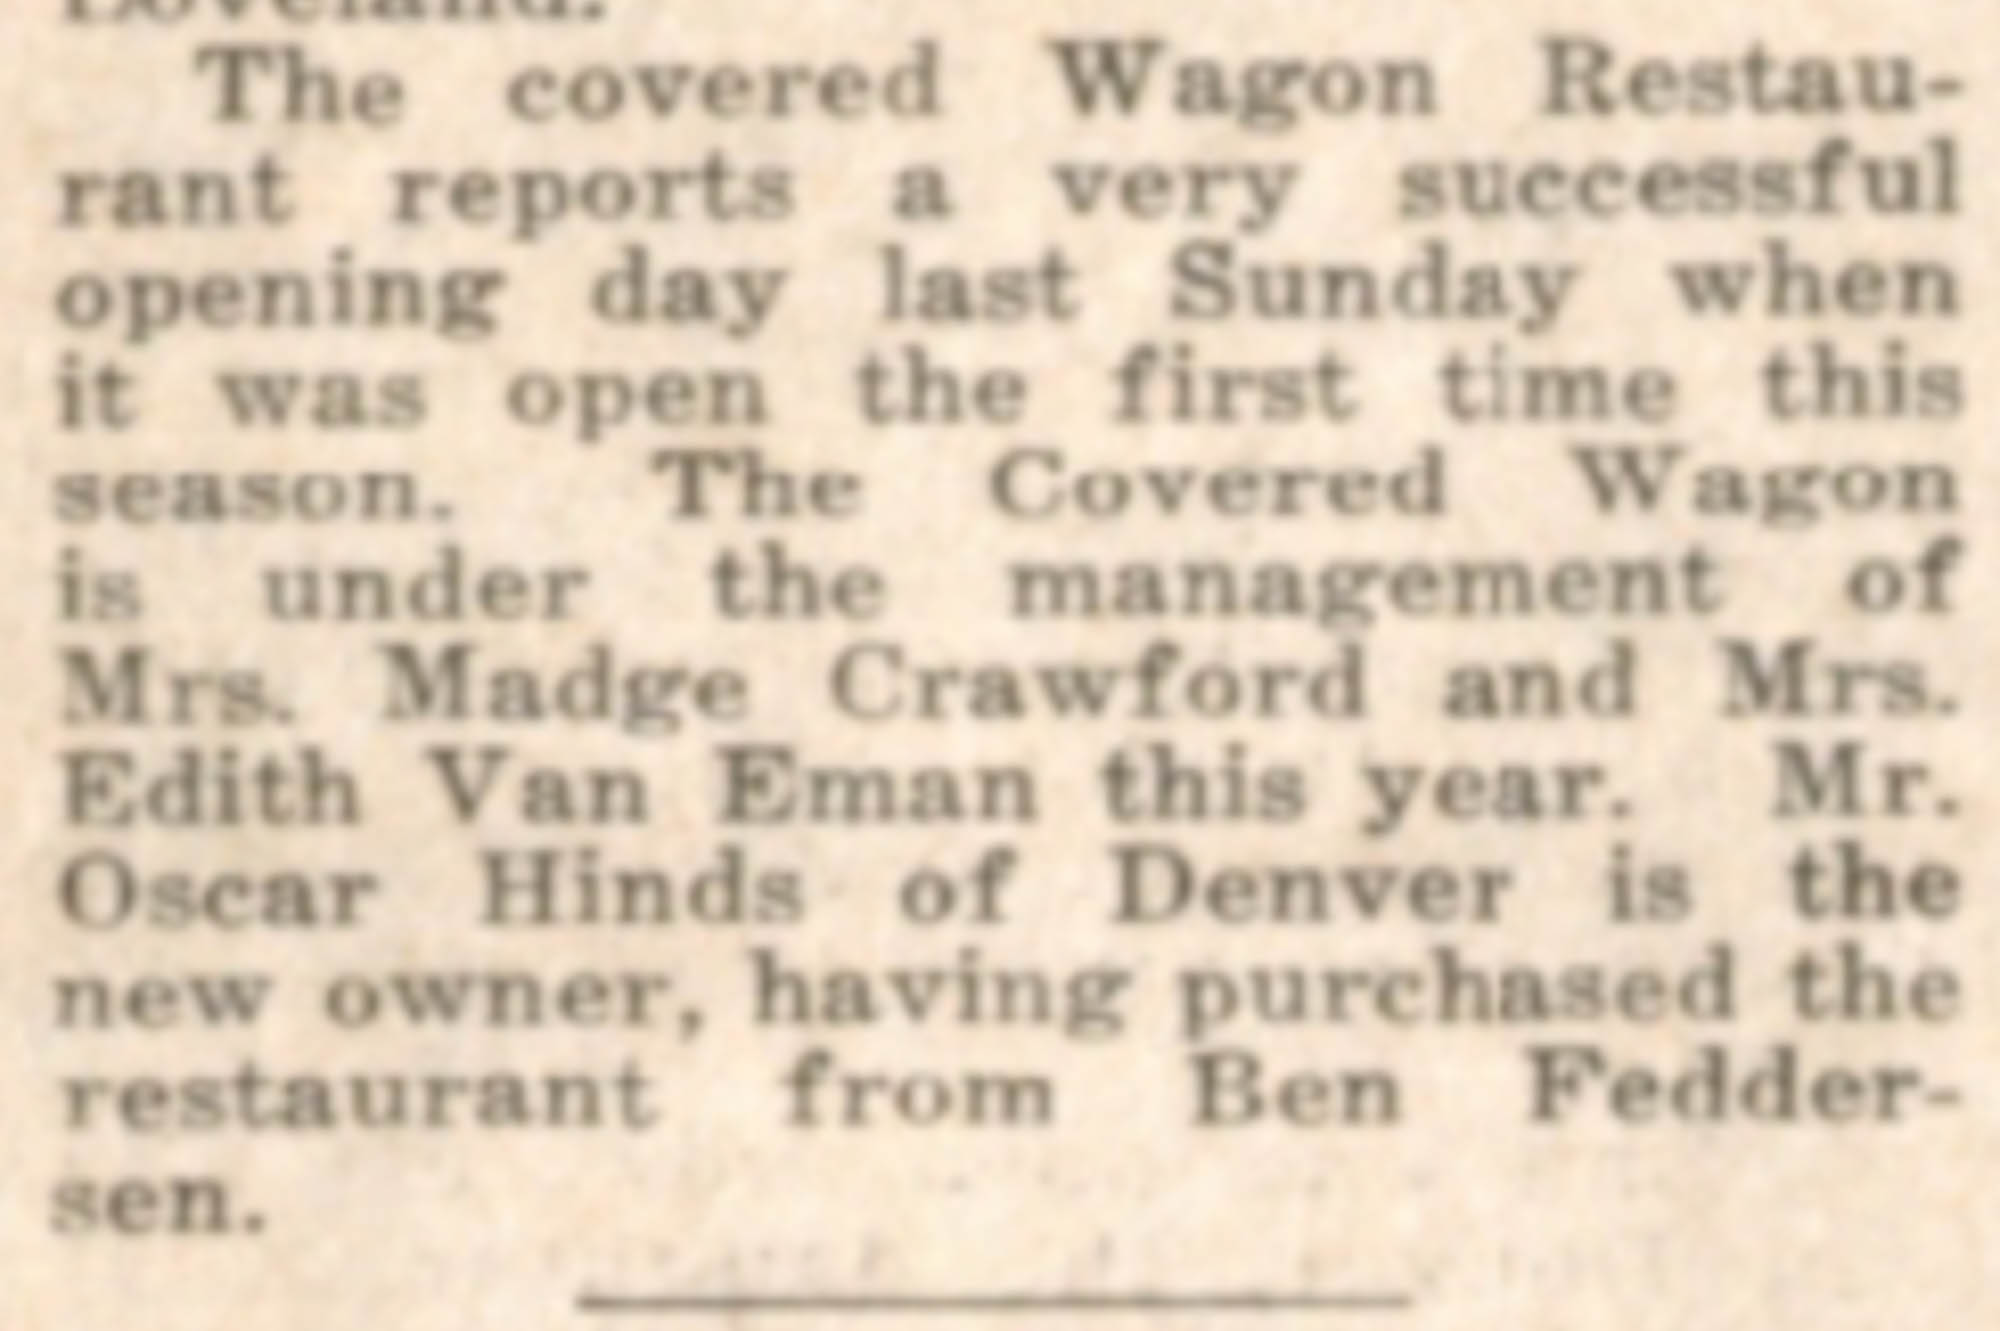 Idlewild Lodge - idlewildlodge.github.io - 1960-04-15 - The Estes Park Trail - Oscar Hinds buys Covered Wagon Restaurant